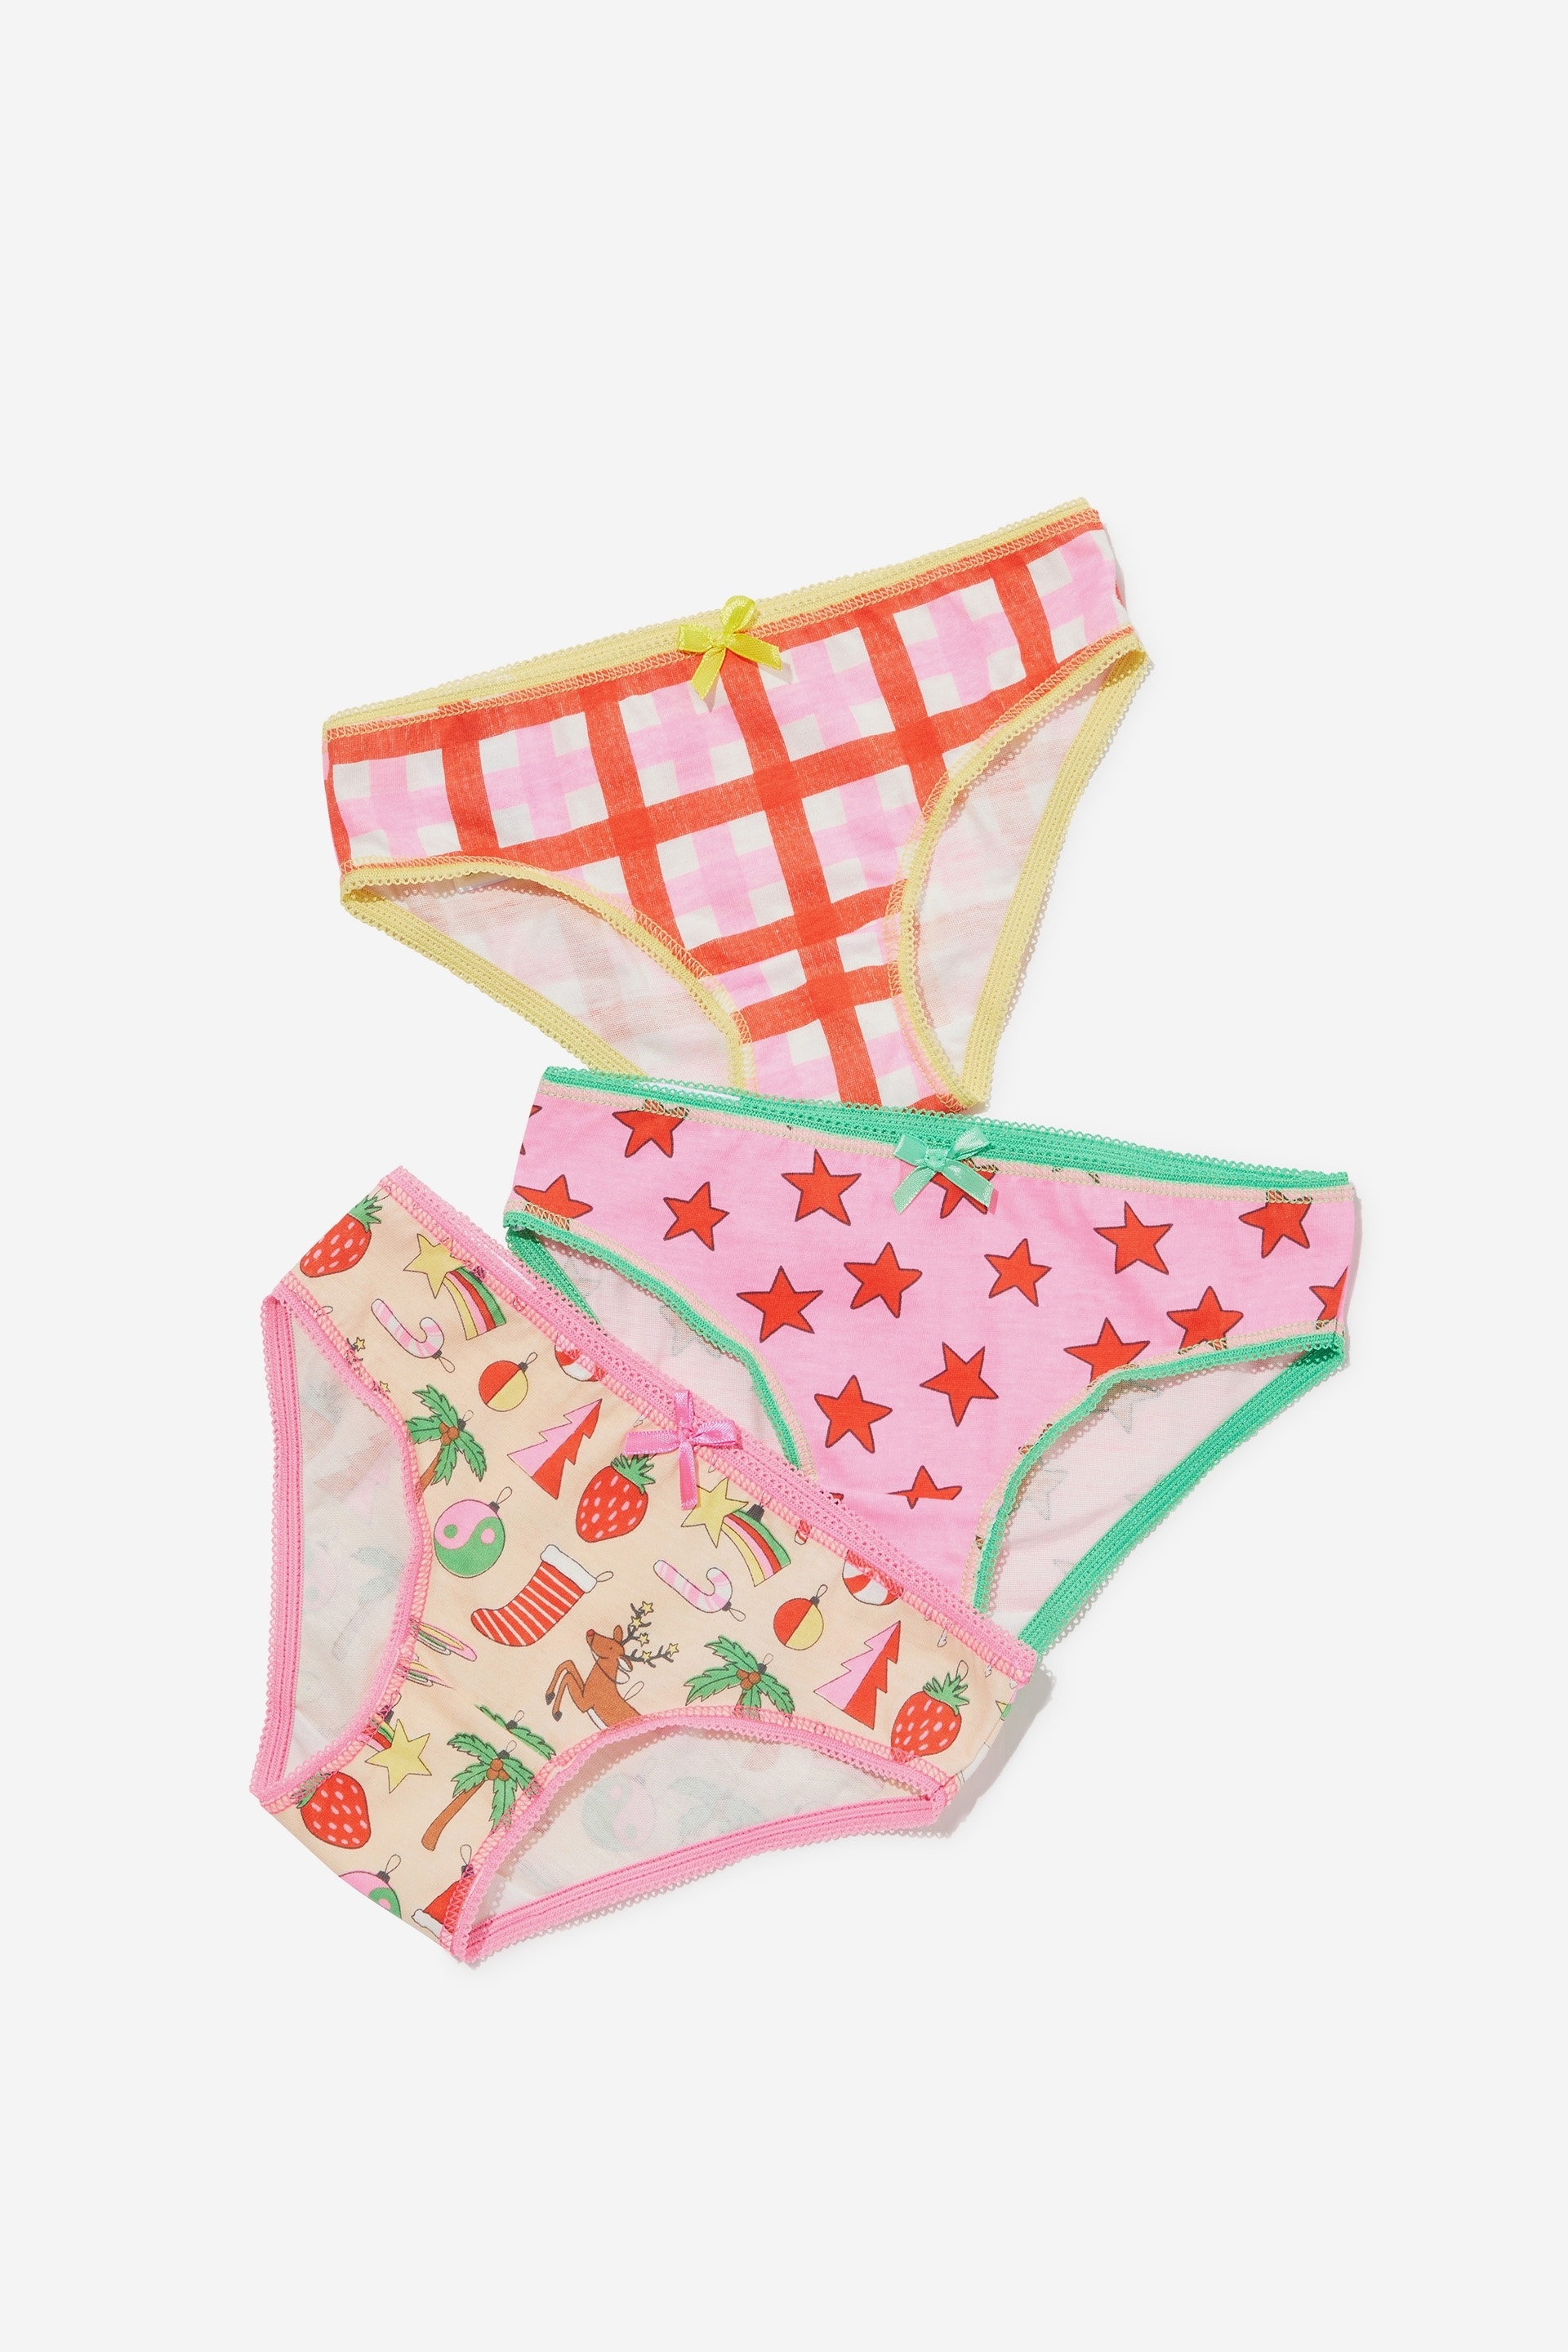 Cotton On Kids - 3 Pack Girls Underwear - Peach tang xmas ornaments/stars